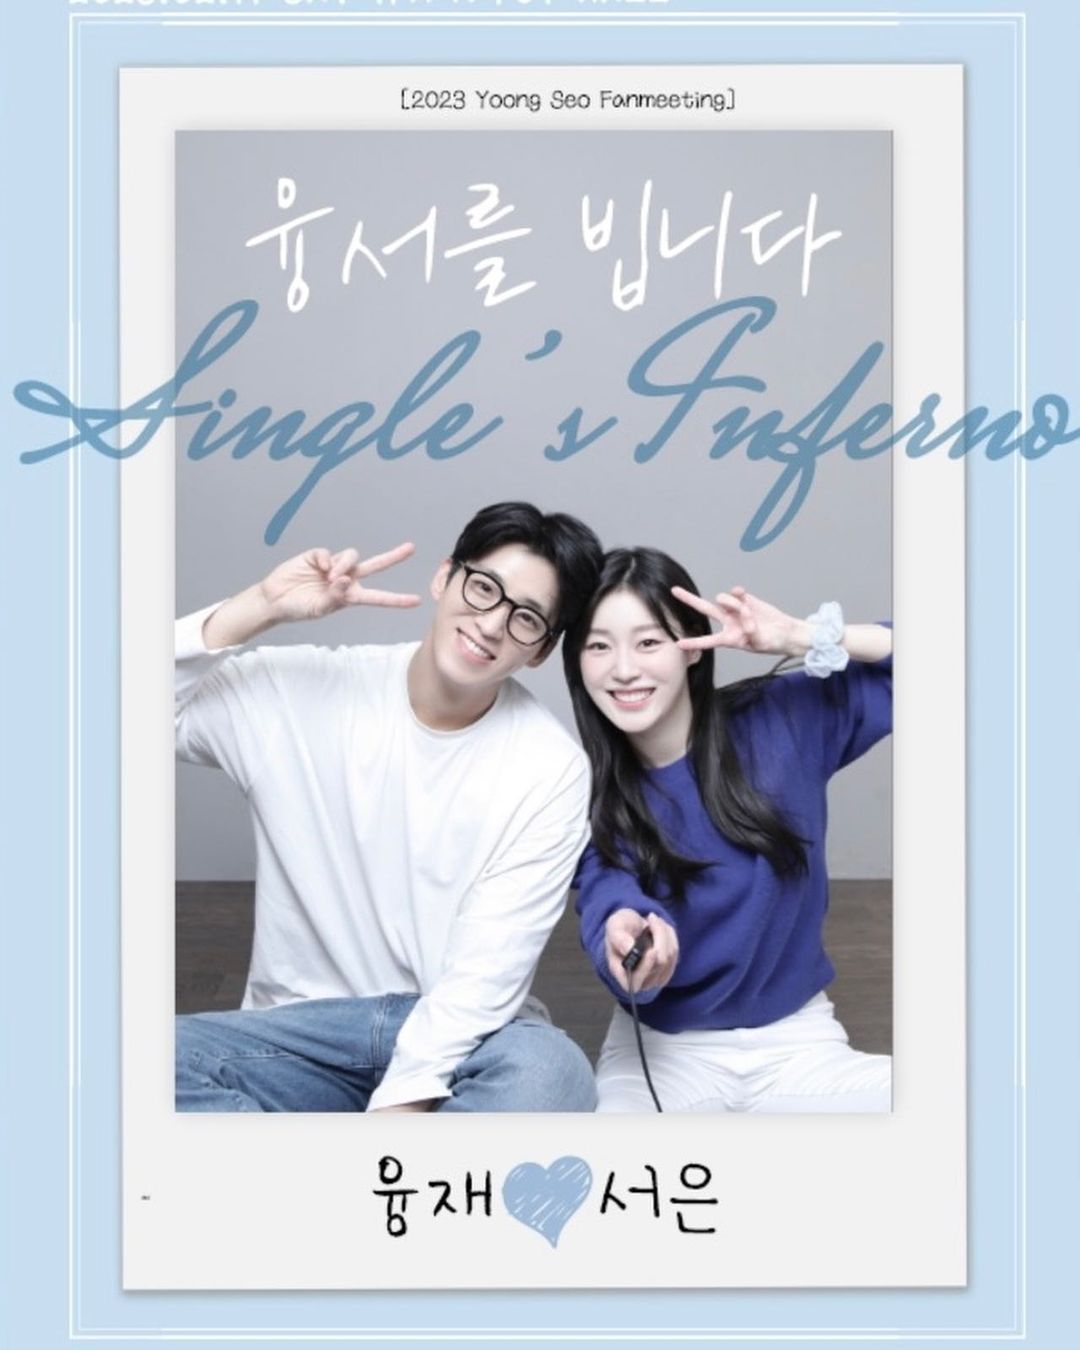 Single’s Inferno 2 Seoeun & Yoongjae Fanmeet